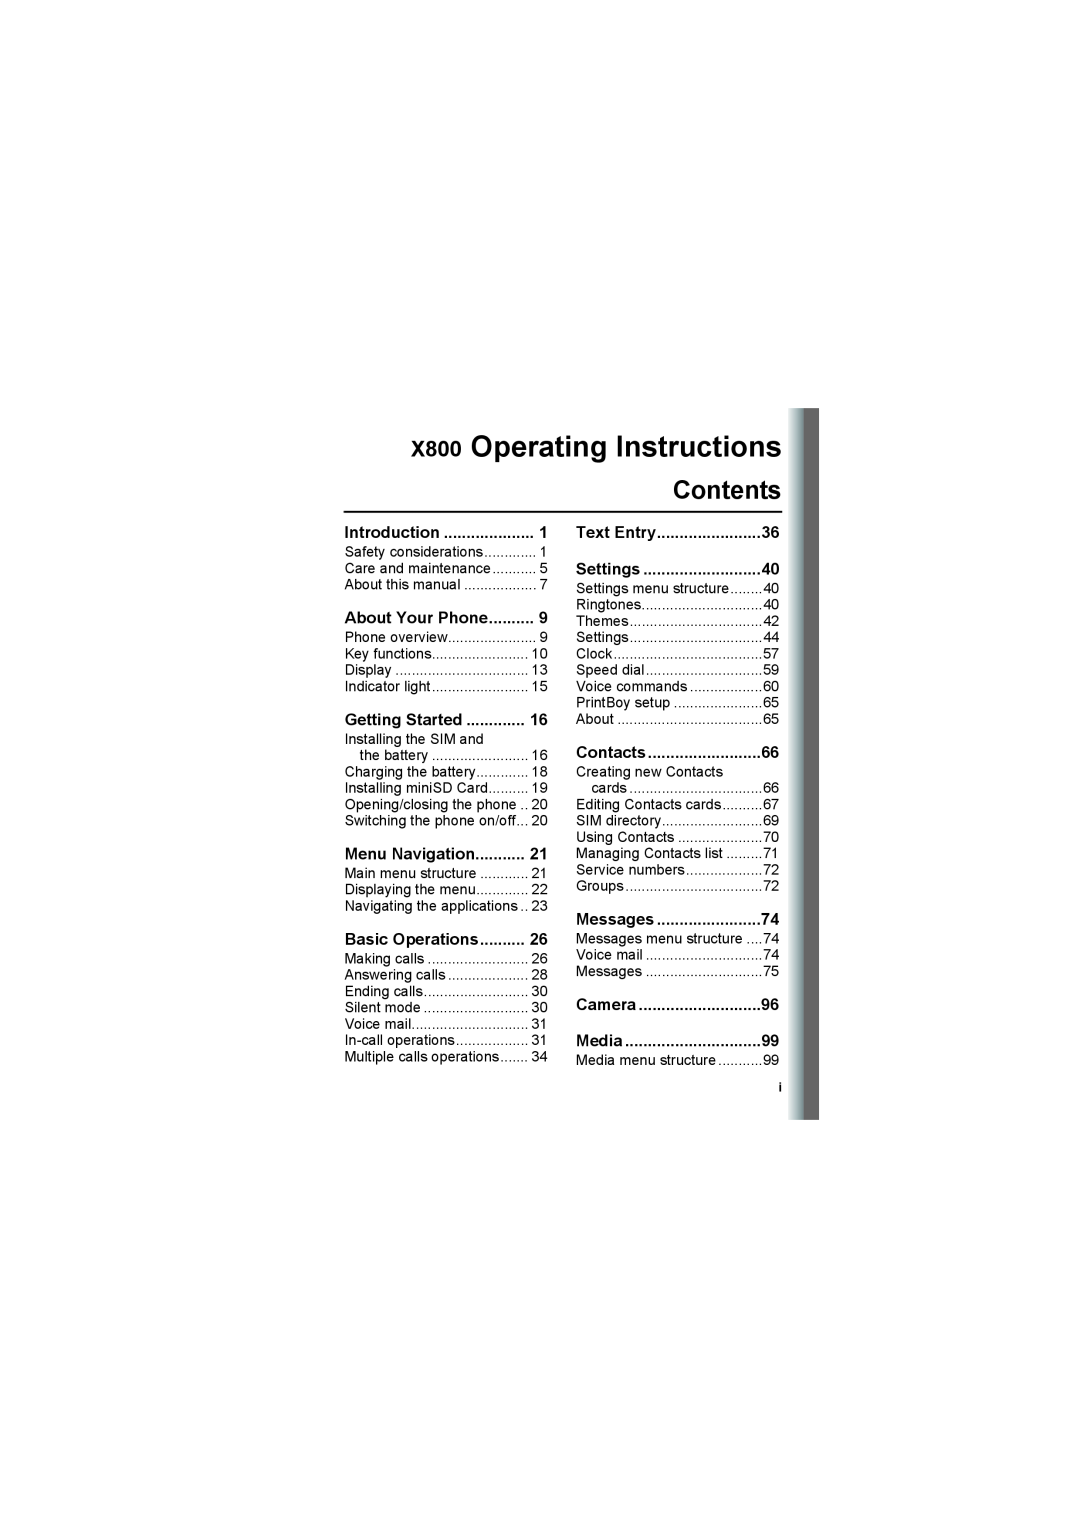 Panasonic EB-X800 manual Contents, X800 Operating Instructions 